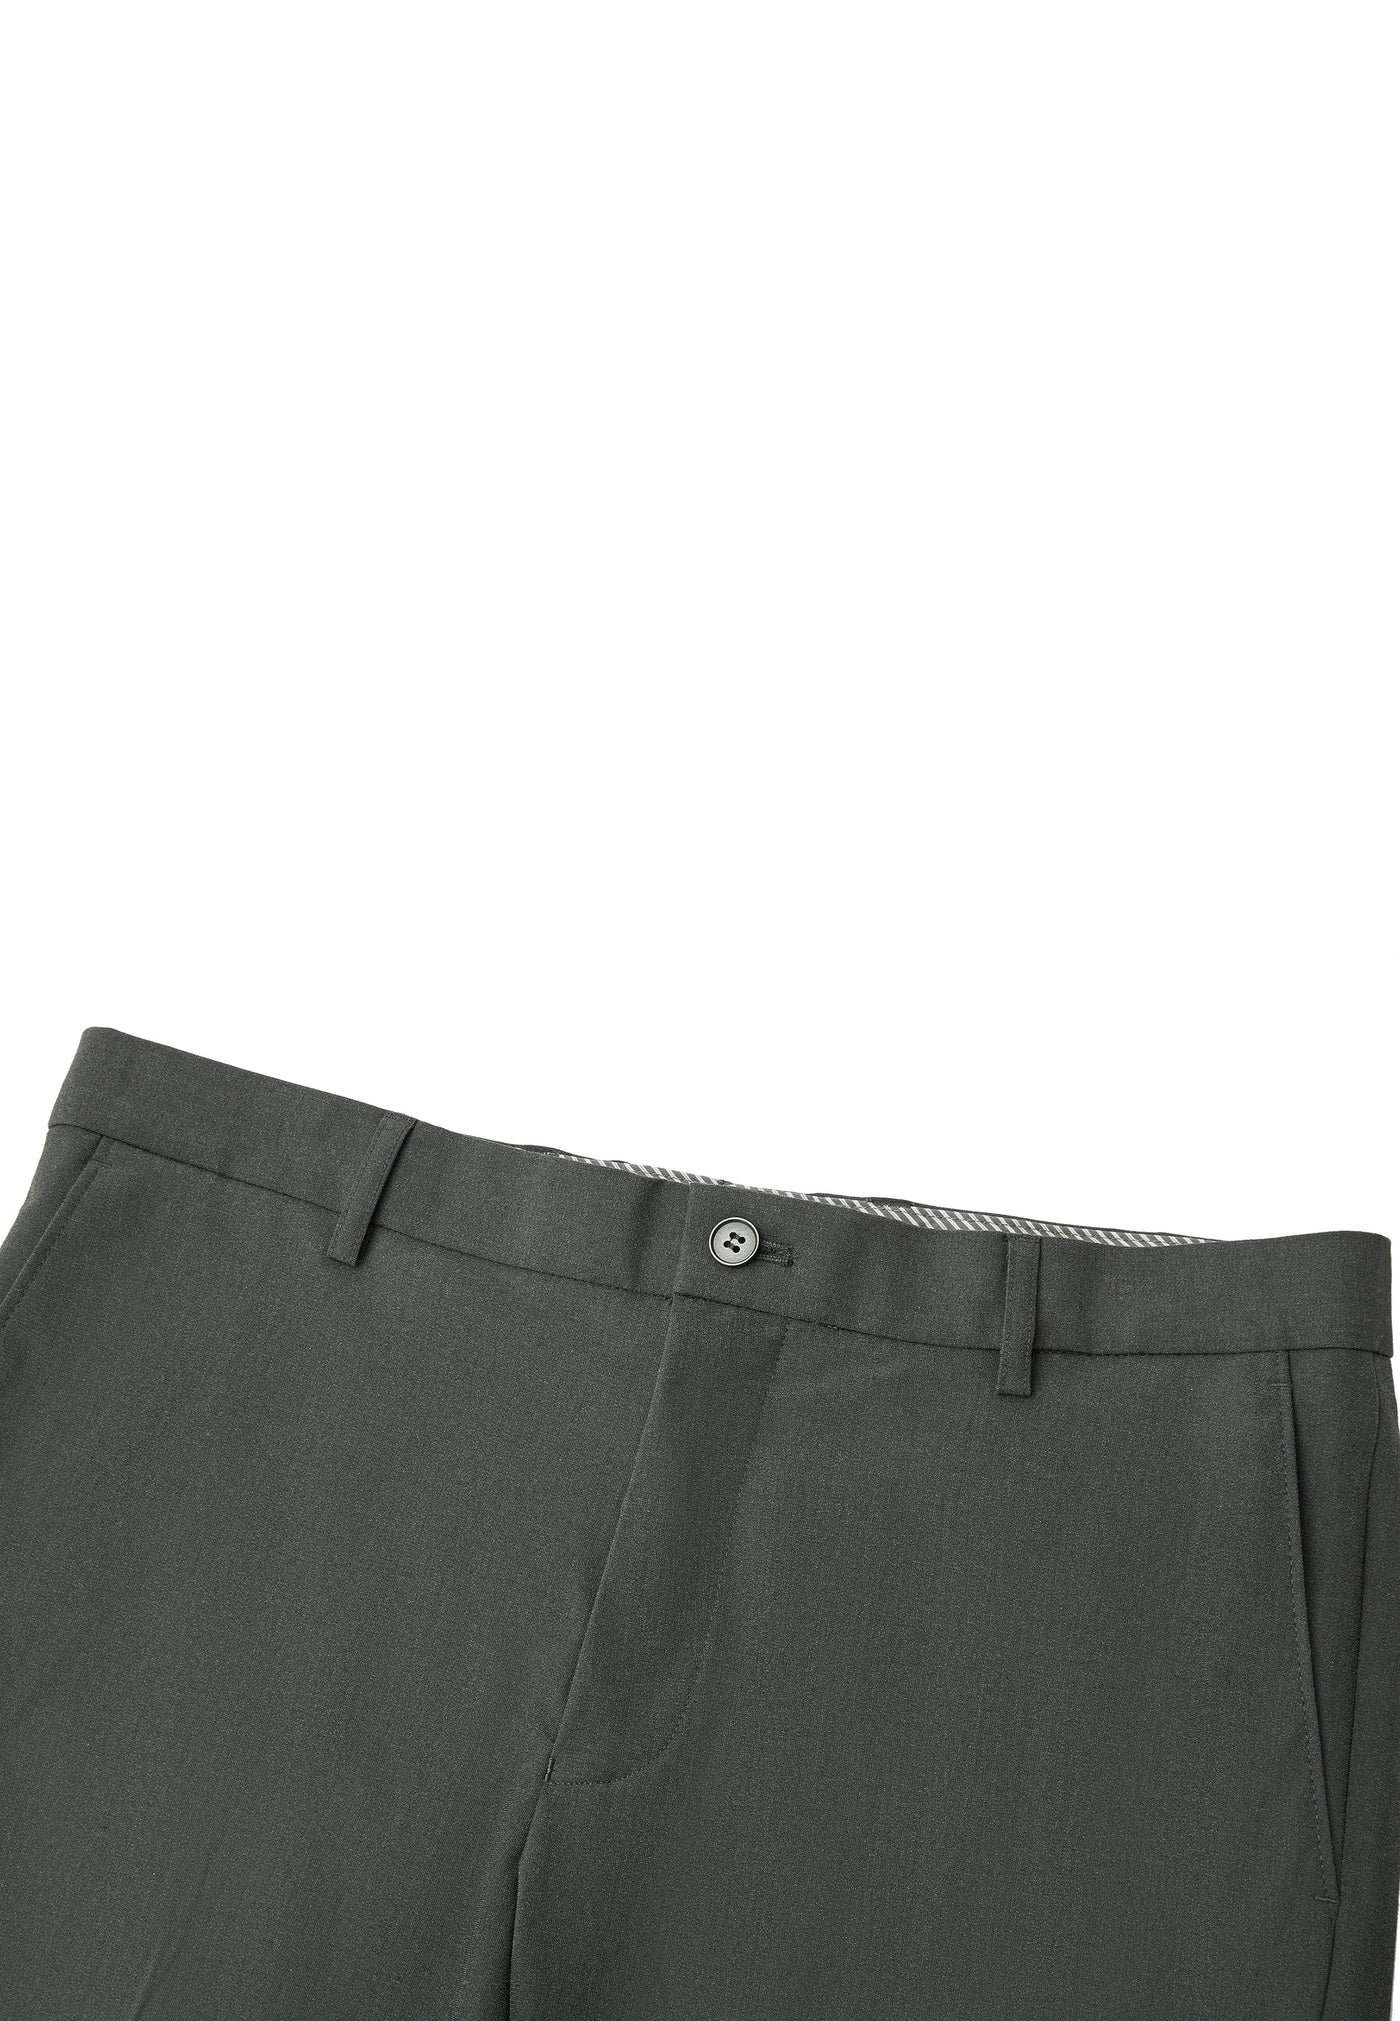 Men Clothing Multi-Way Stretch Anti-Bacterial Suit Pants Smart Fit